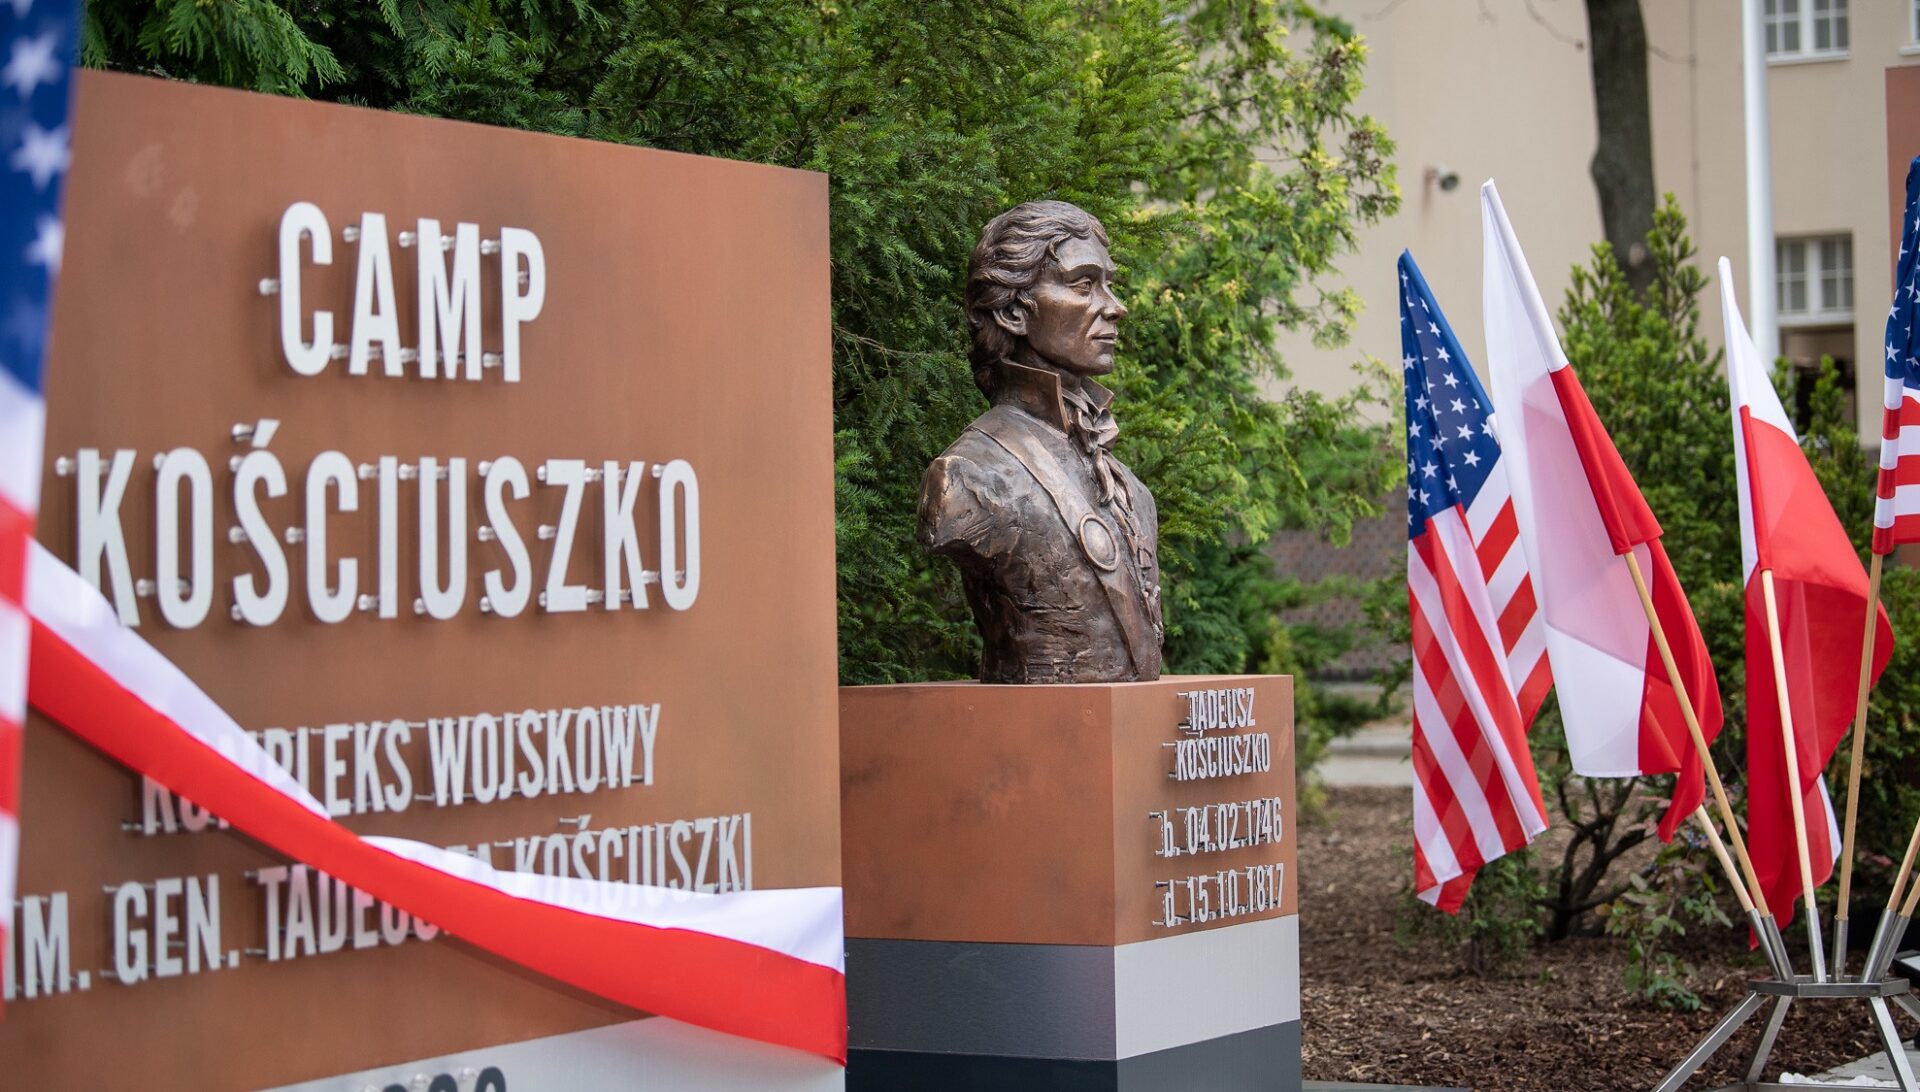 The Polish-American hero - Tadeusz Kościuszko the patron of the first permanent U.S. installation on NATO’s eastern flank